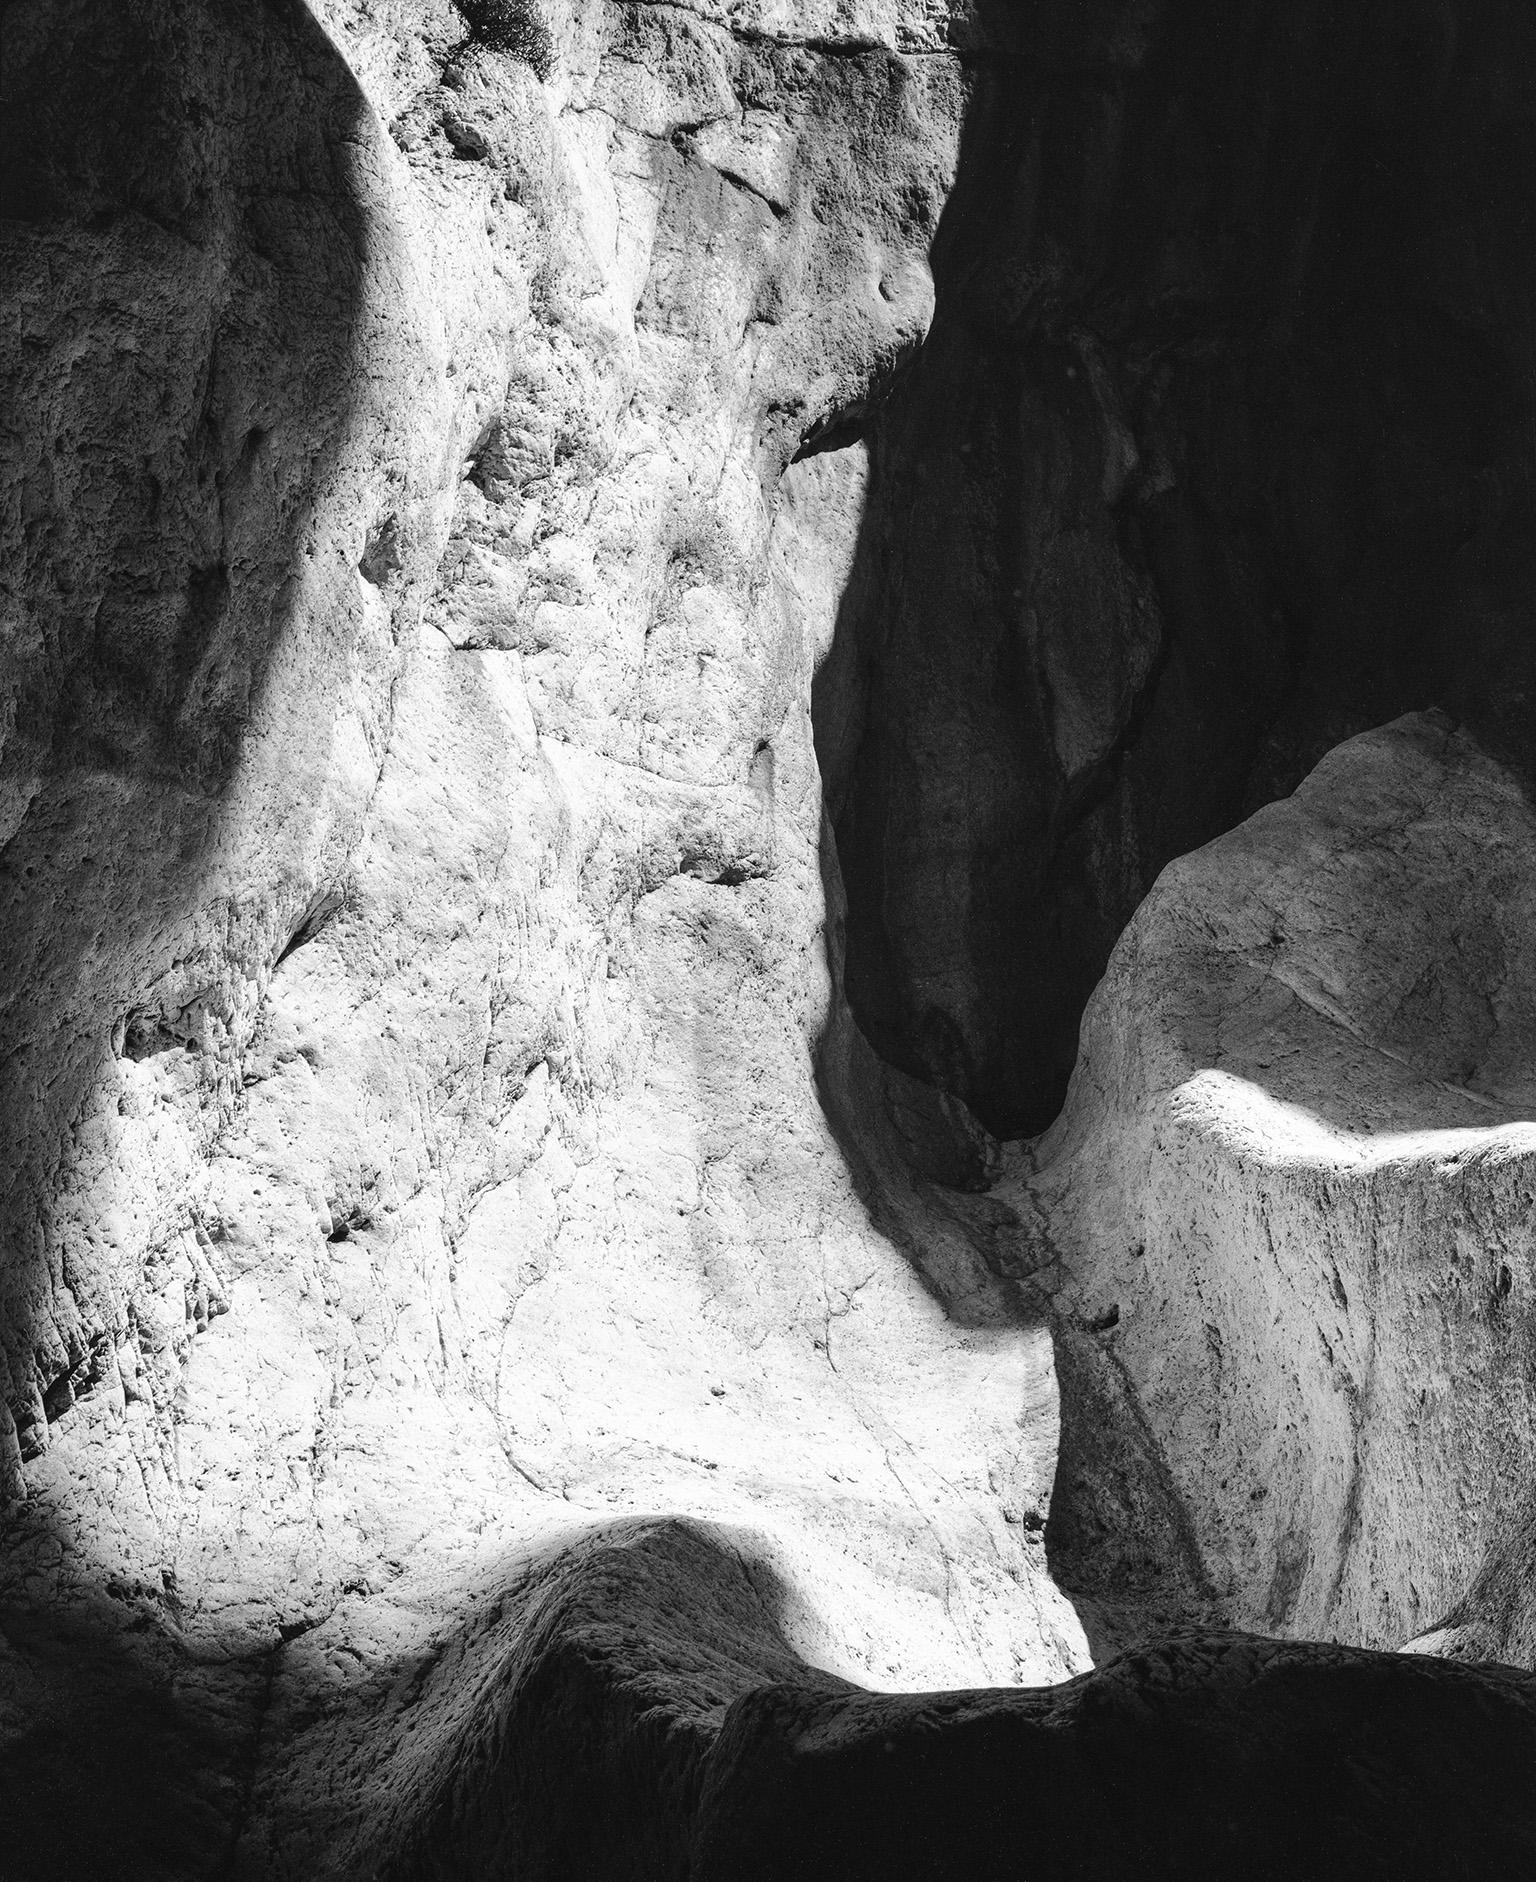 John Stathatos Landscape Photograph - Earth VI - Black and White Photograph, Cave, Rocks, Natural Landscape, Light